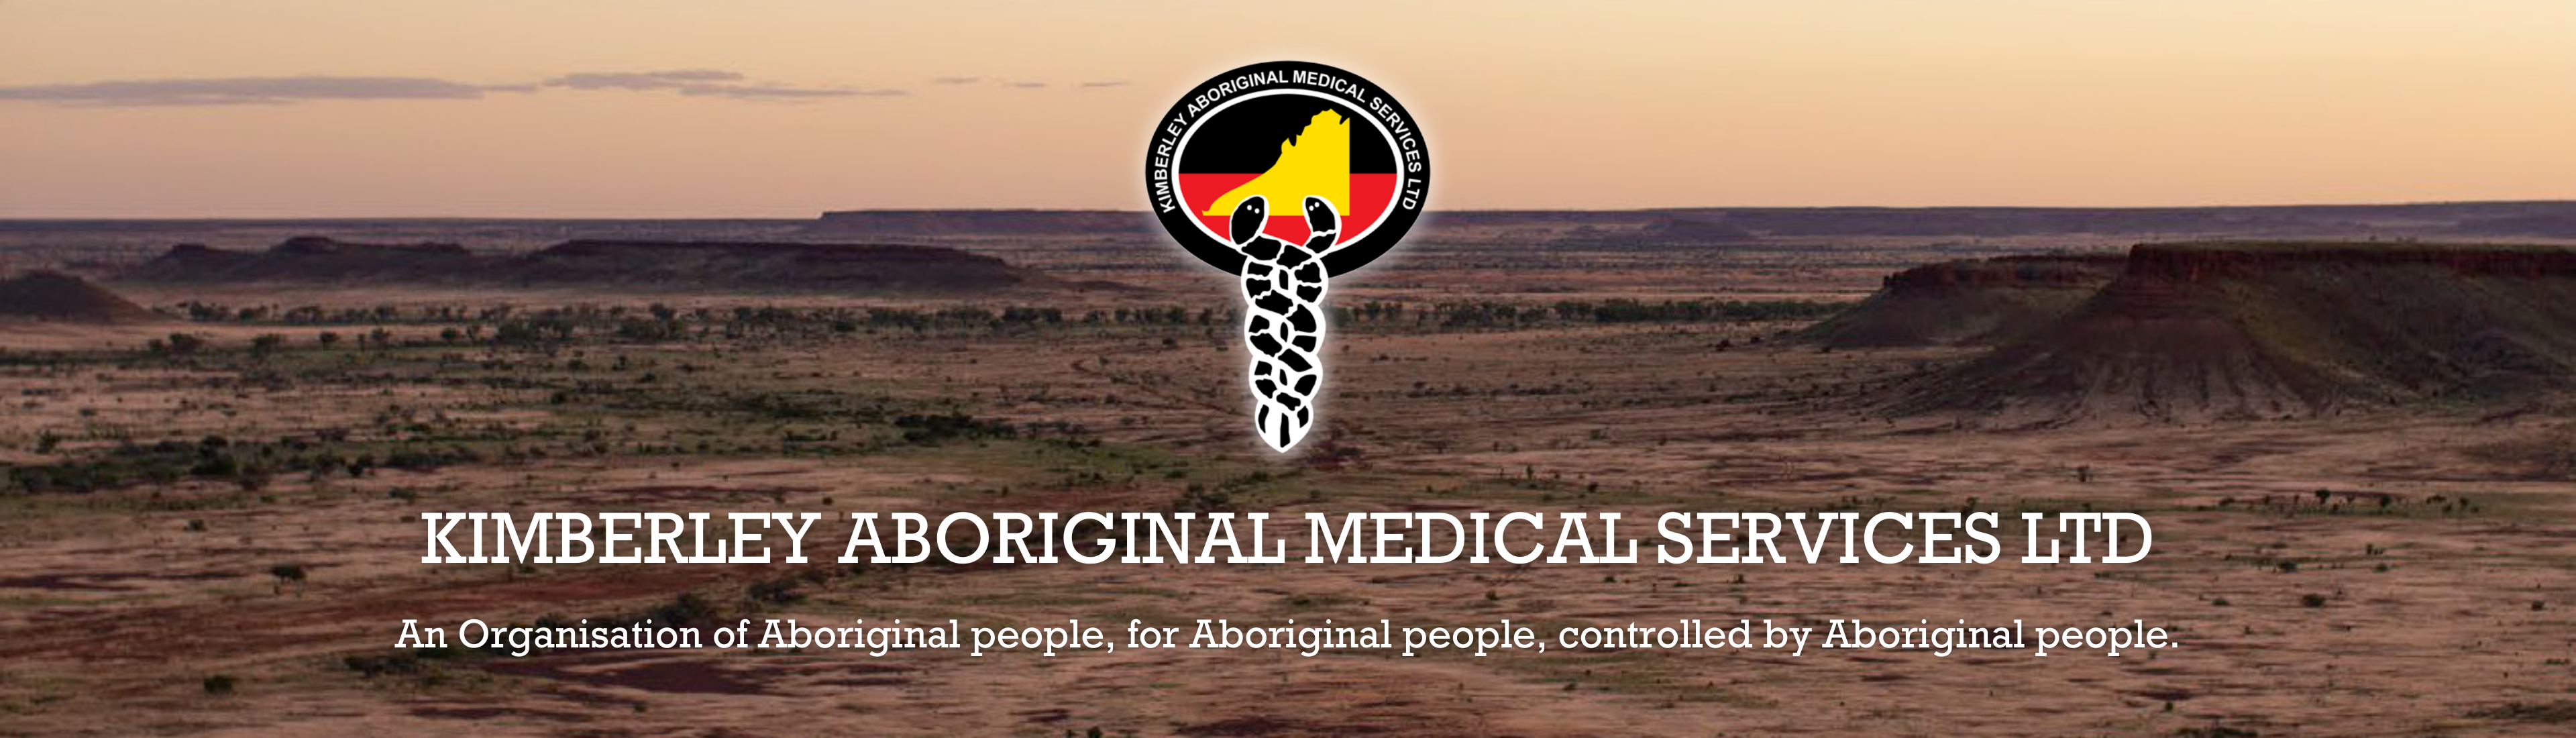 Kimberley Aboriginal Medical Services